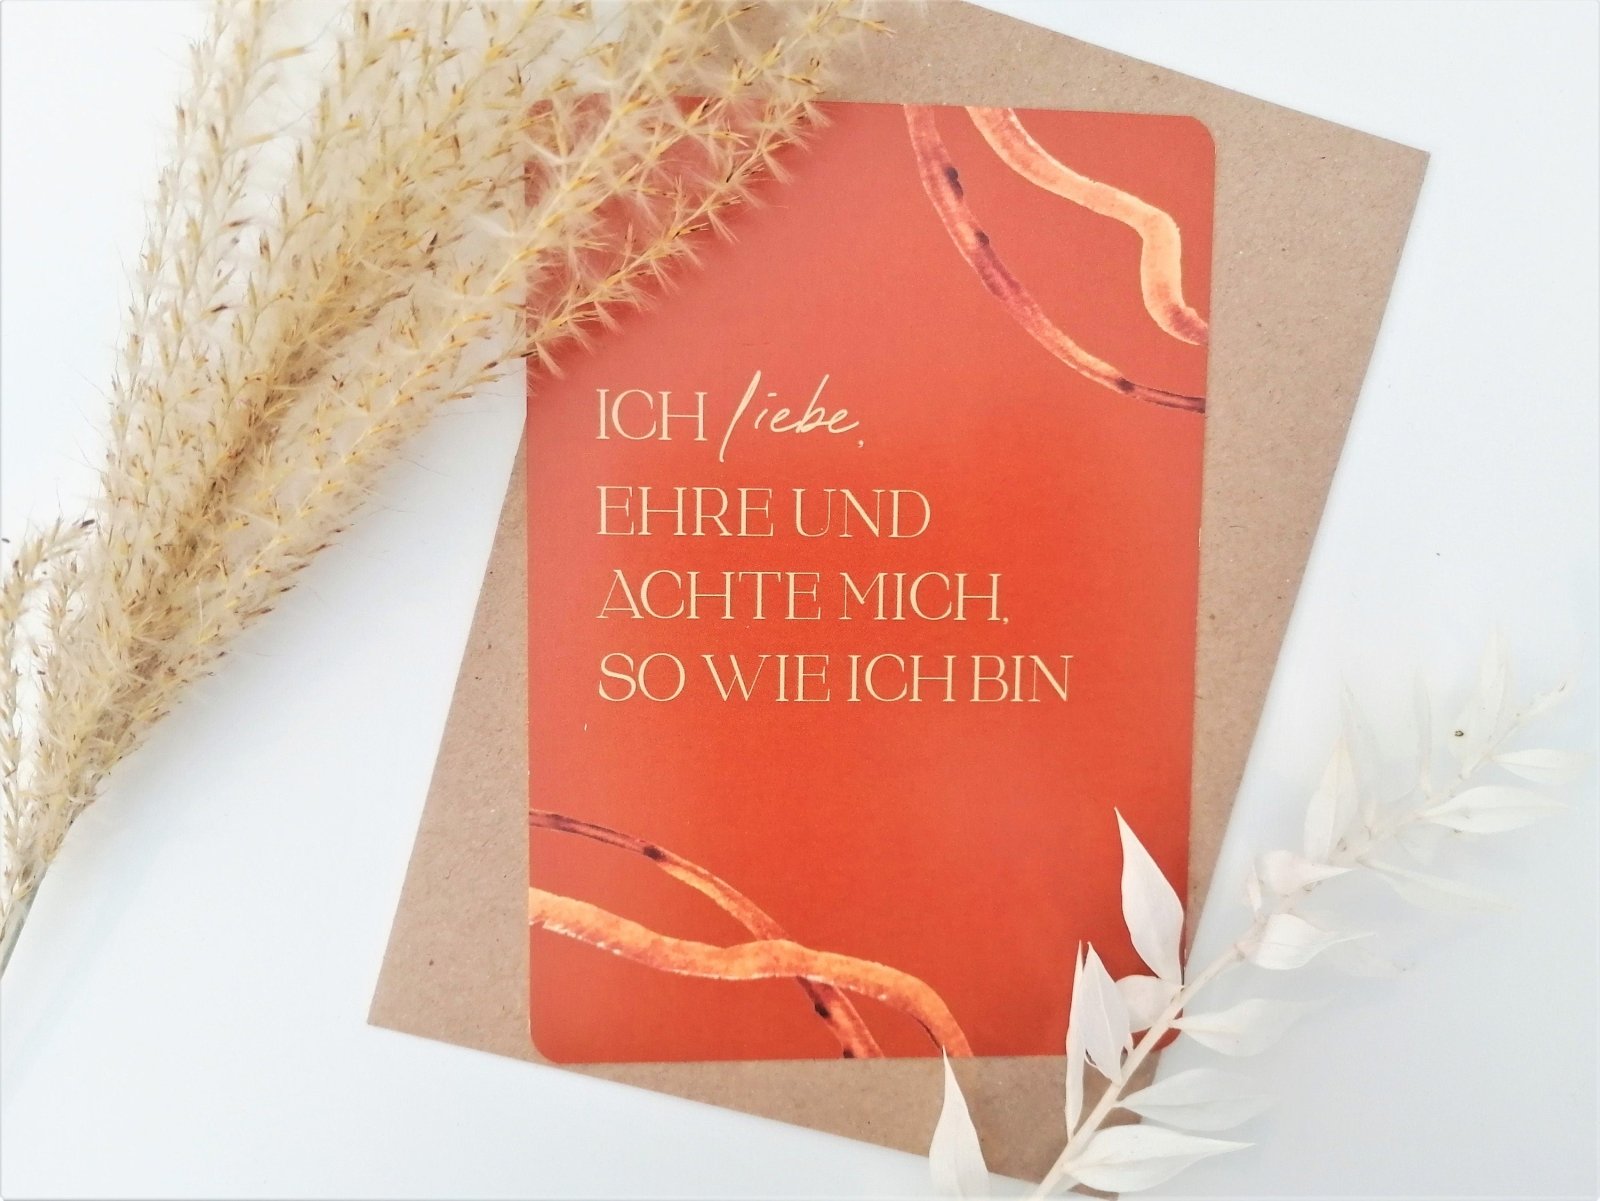 Affirmationskarten deutsch, positive Glaubenssätze, Achtsamkeit - HappyLuz Shop